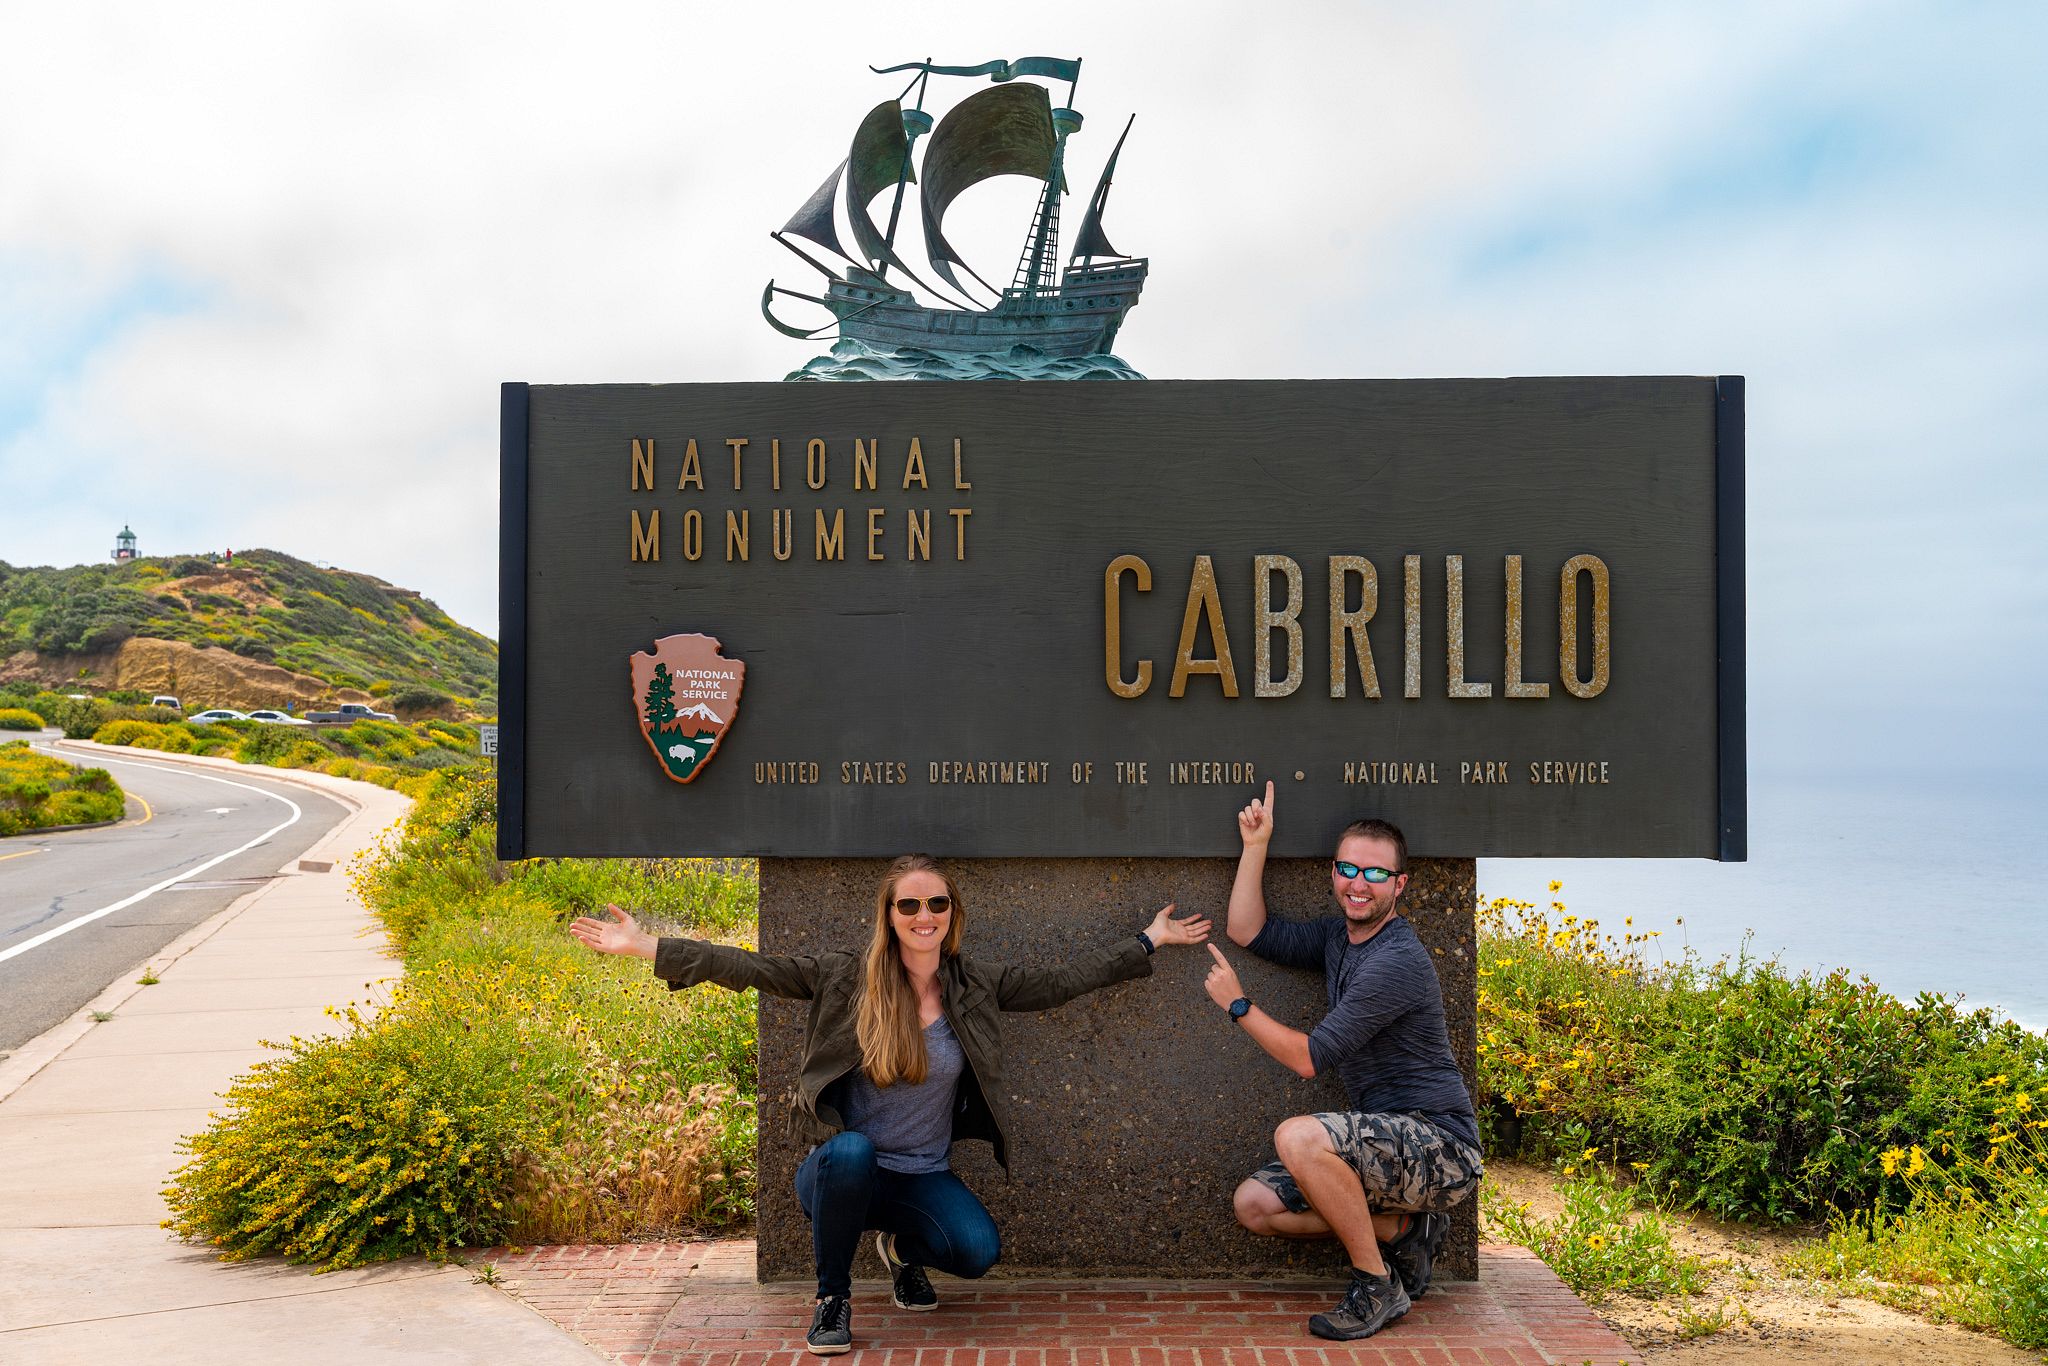 Cabrillo National Monument